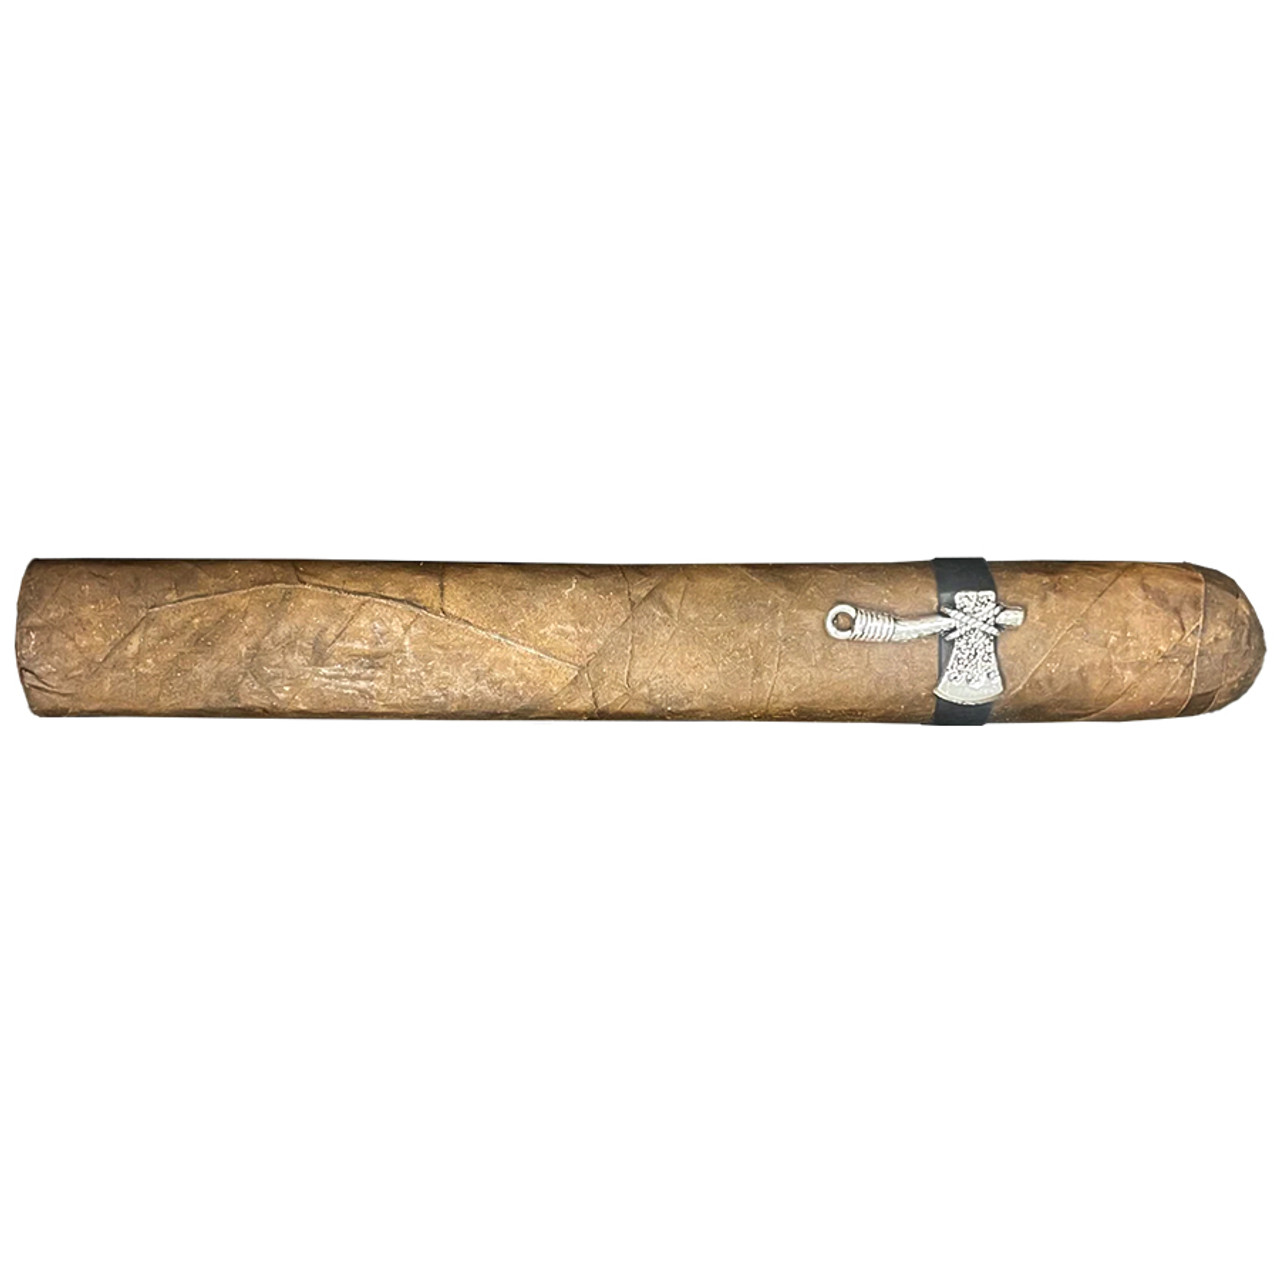 Nomad Cigars - Furious Tomahawk